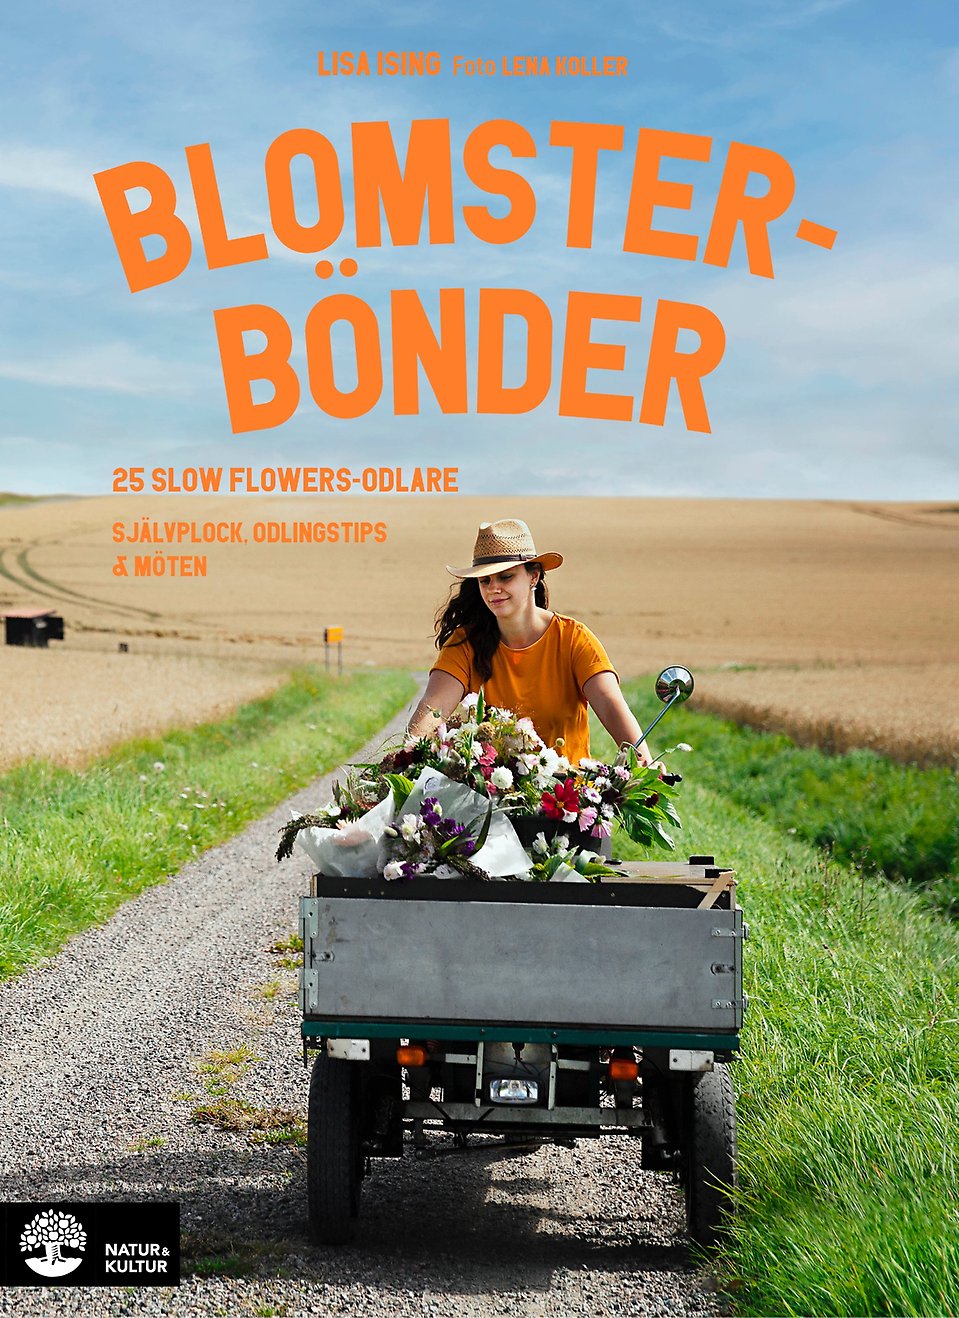 Omslaget på boken "Blomsterbönder" av Lisa Ising. Lisa kör en liten flakbil med flera färgglada buketter på. 